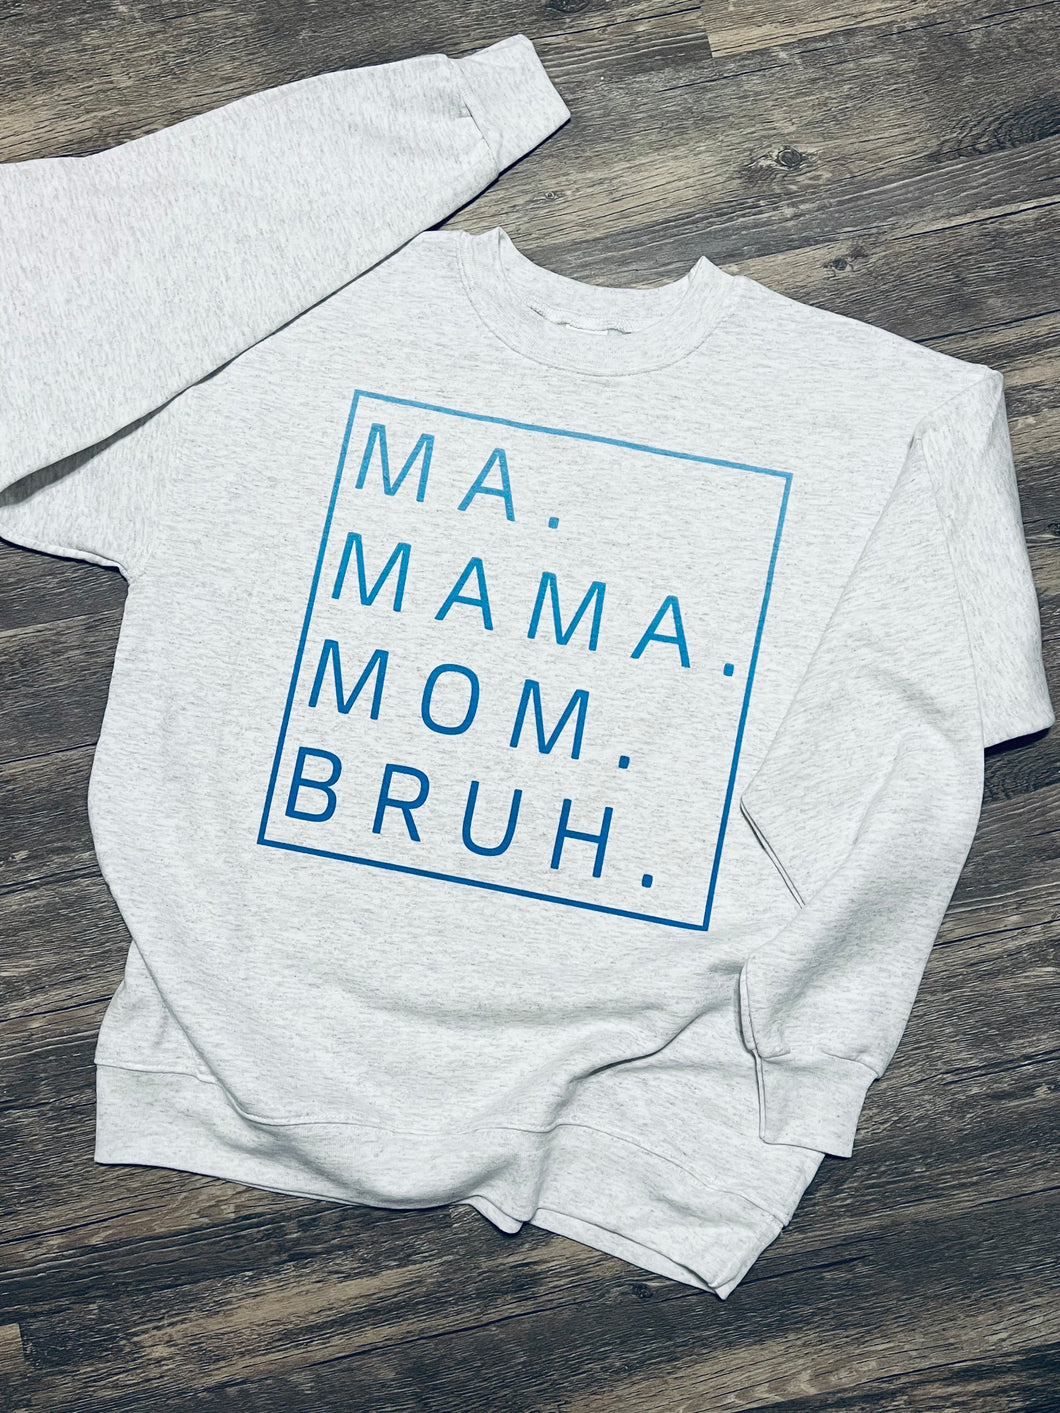 Ma. Mama. Mom. Bruh. Ash graphic tee long sleeve crew or hoodie - Mavictoria Designs Hot Press Express